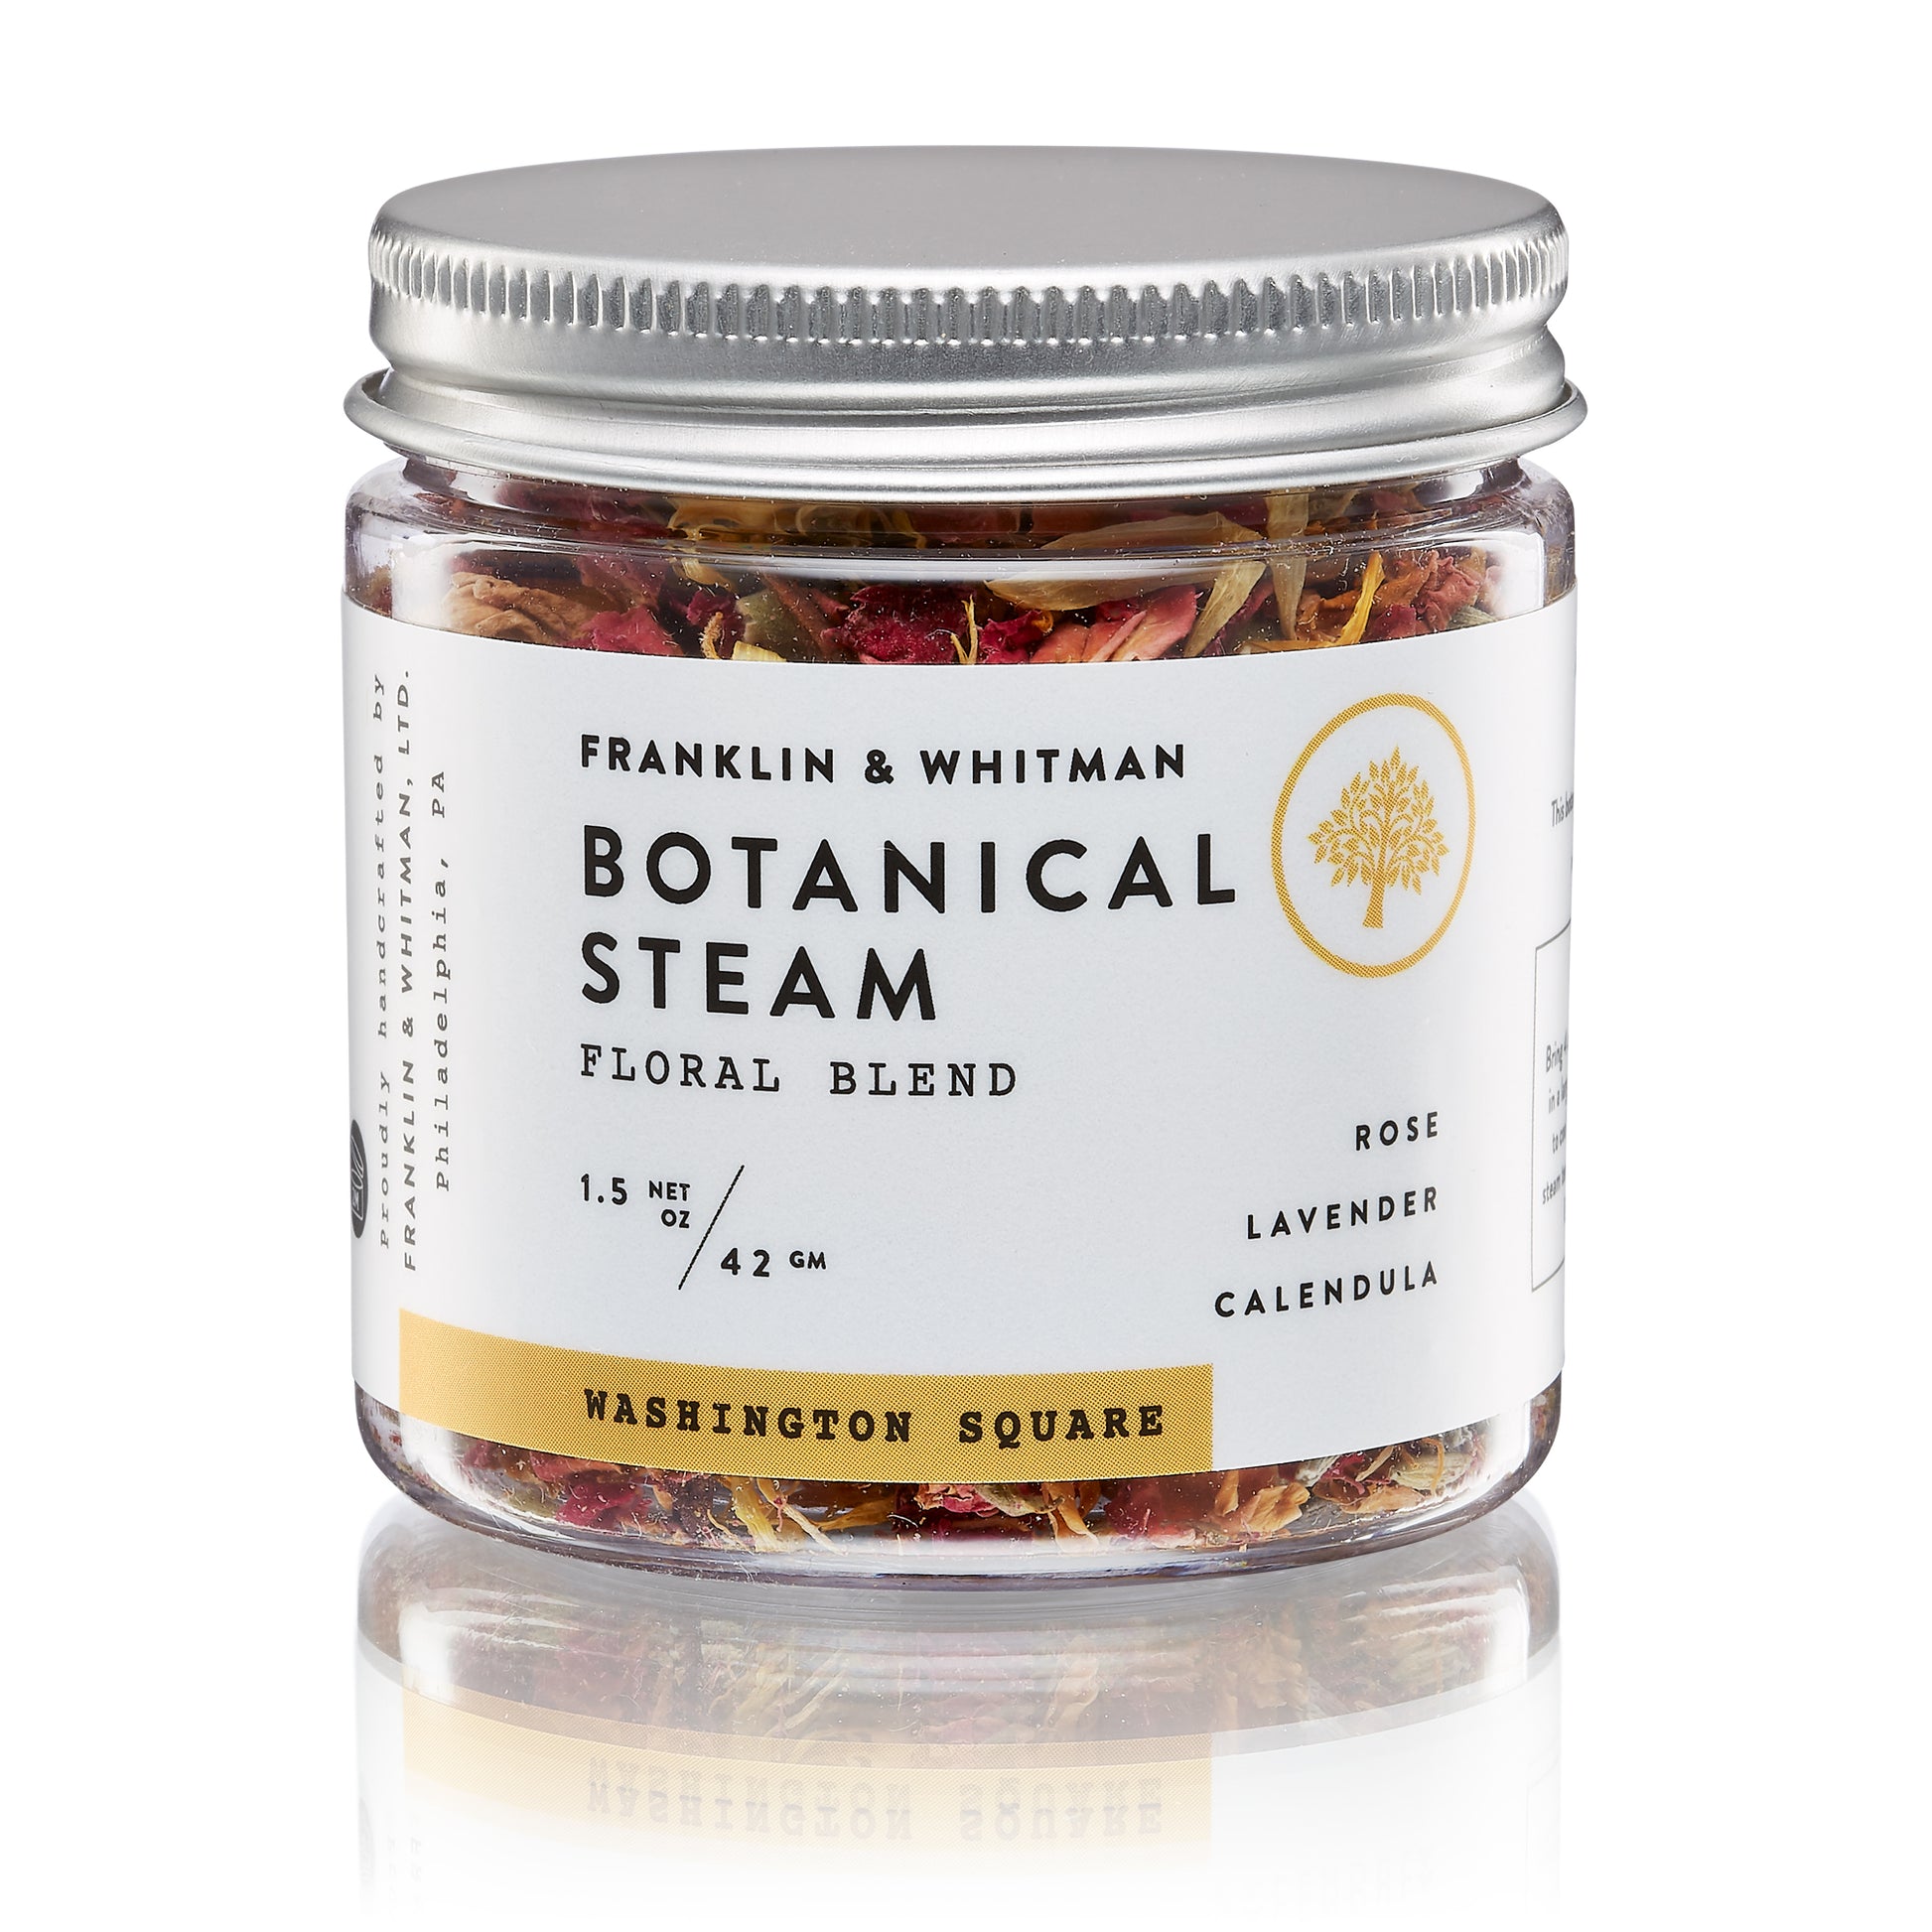 Vegan, plant based, cruelty free Washington Square Botanical Steam jar for skin care